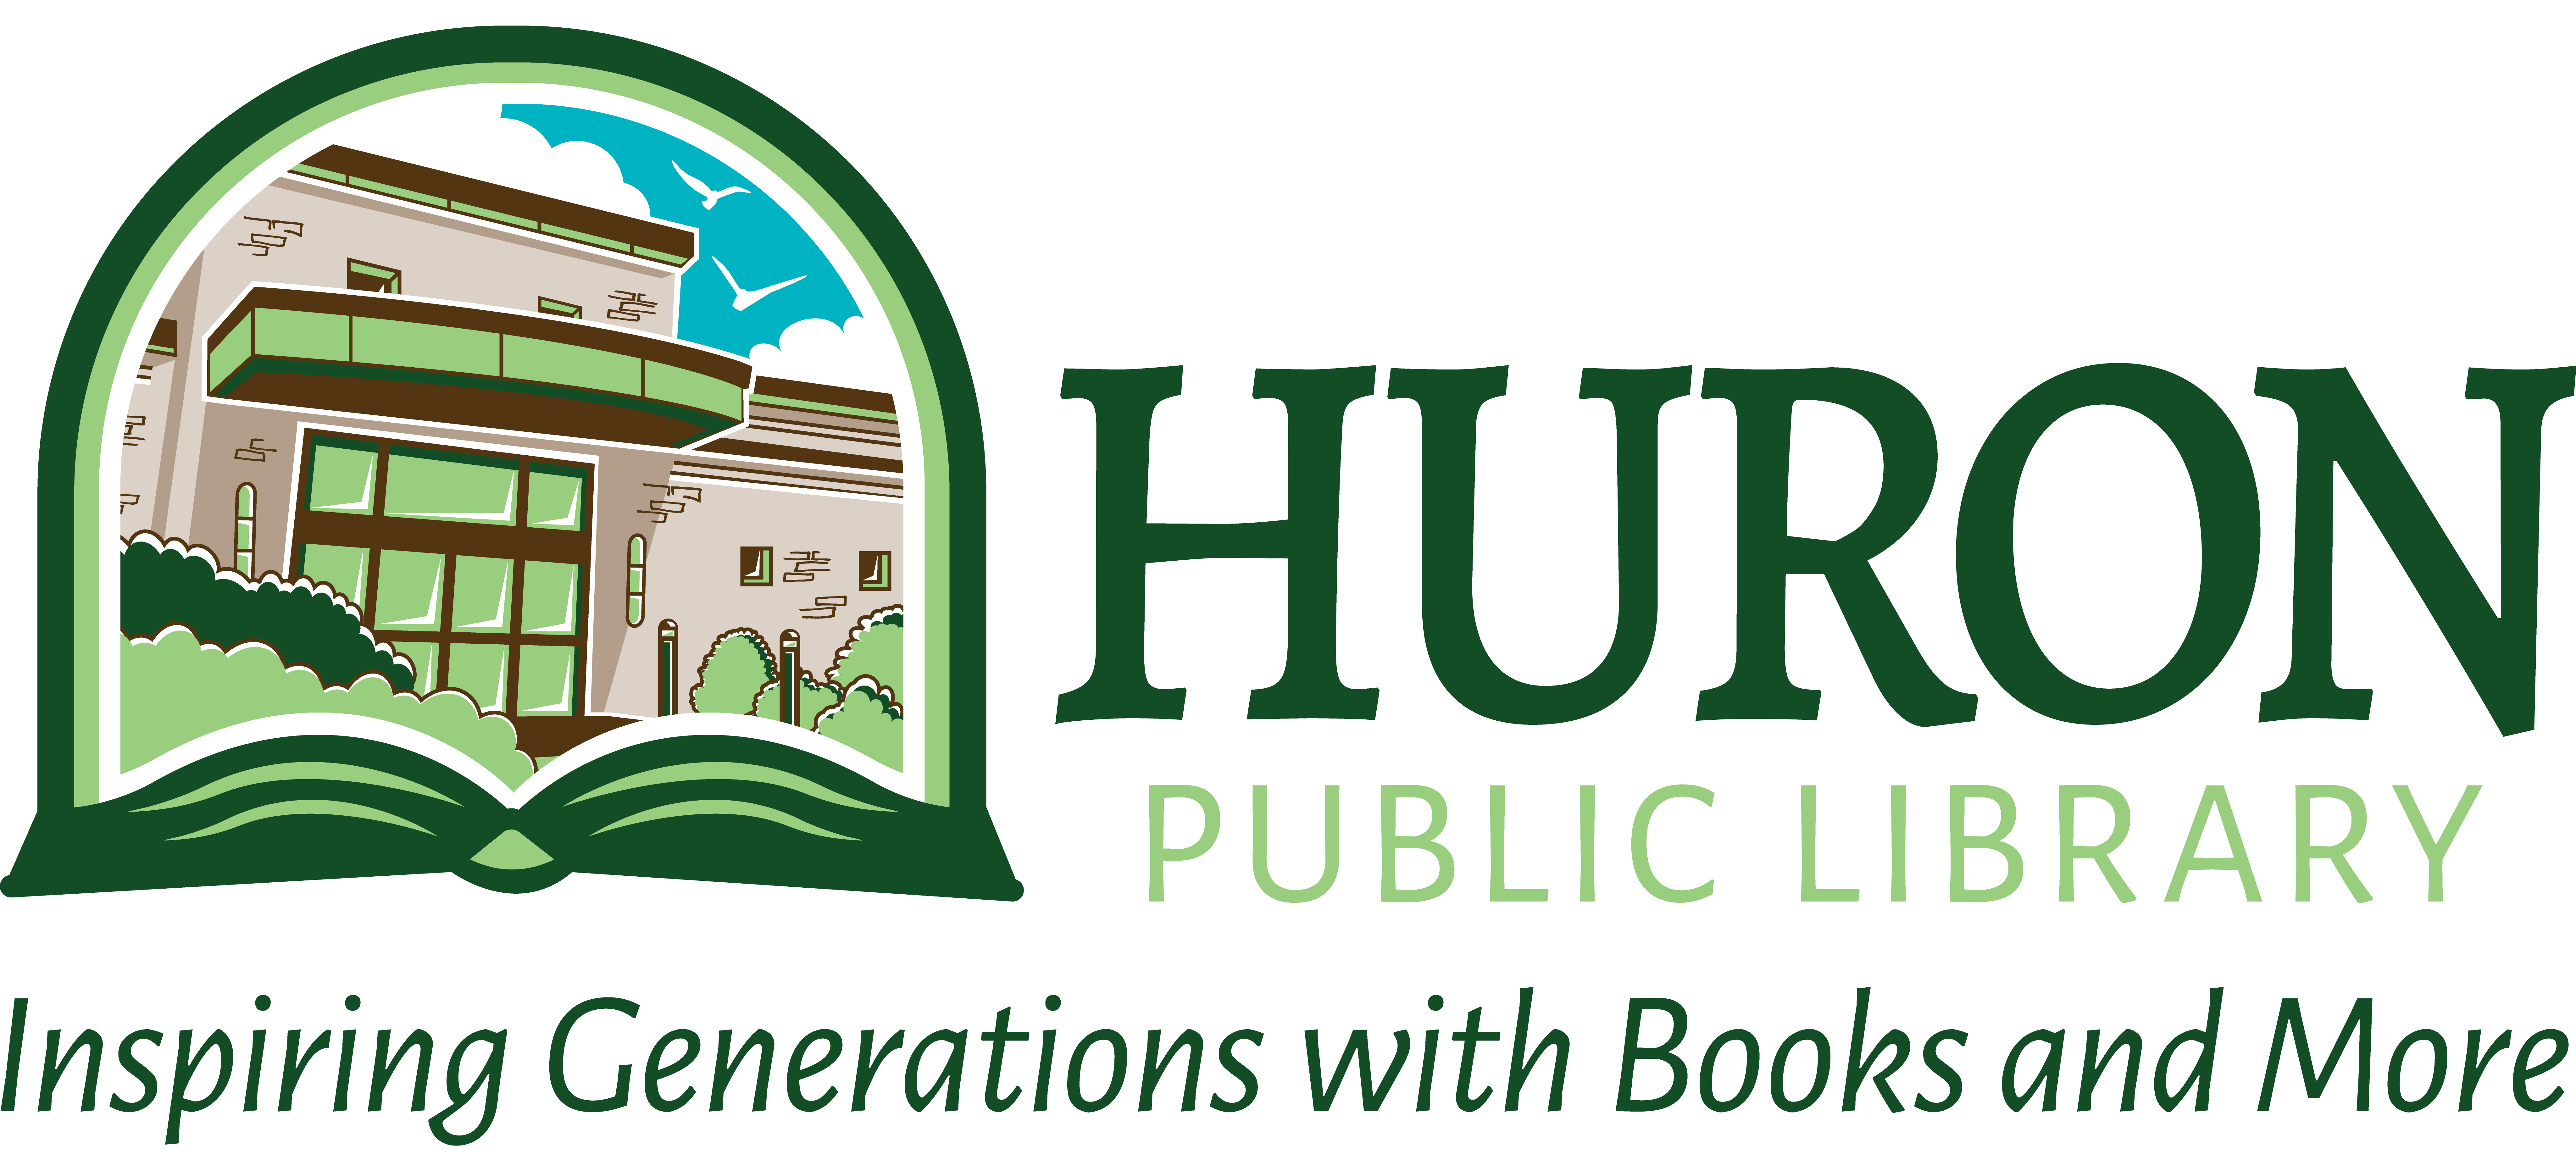 Huron-Public-Library-Horizontal-Tagline-Full-Color.jpg